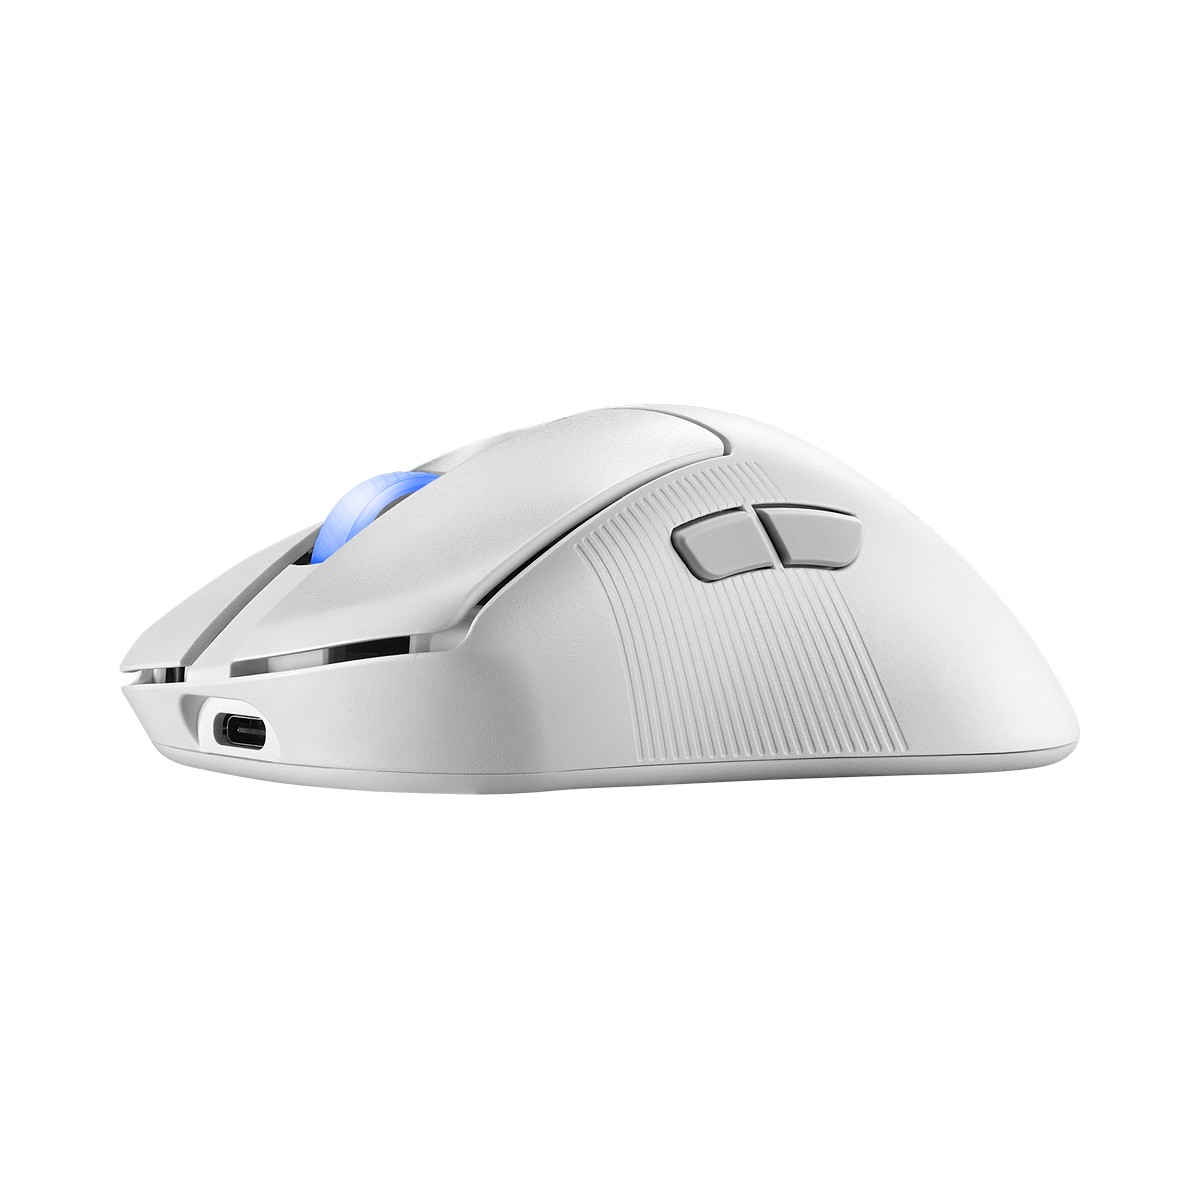 Asus - ASUS ROG Keris II Wireless Ace Optical Gaming Mouse - White